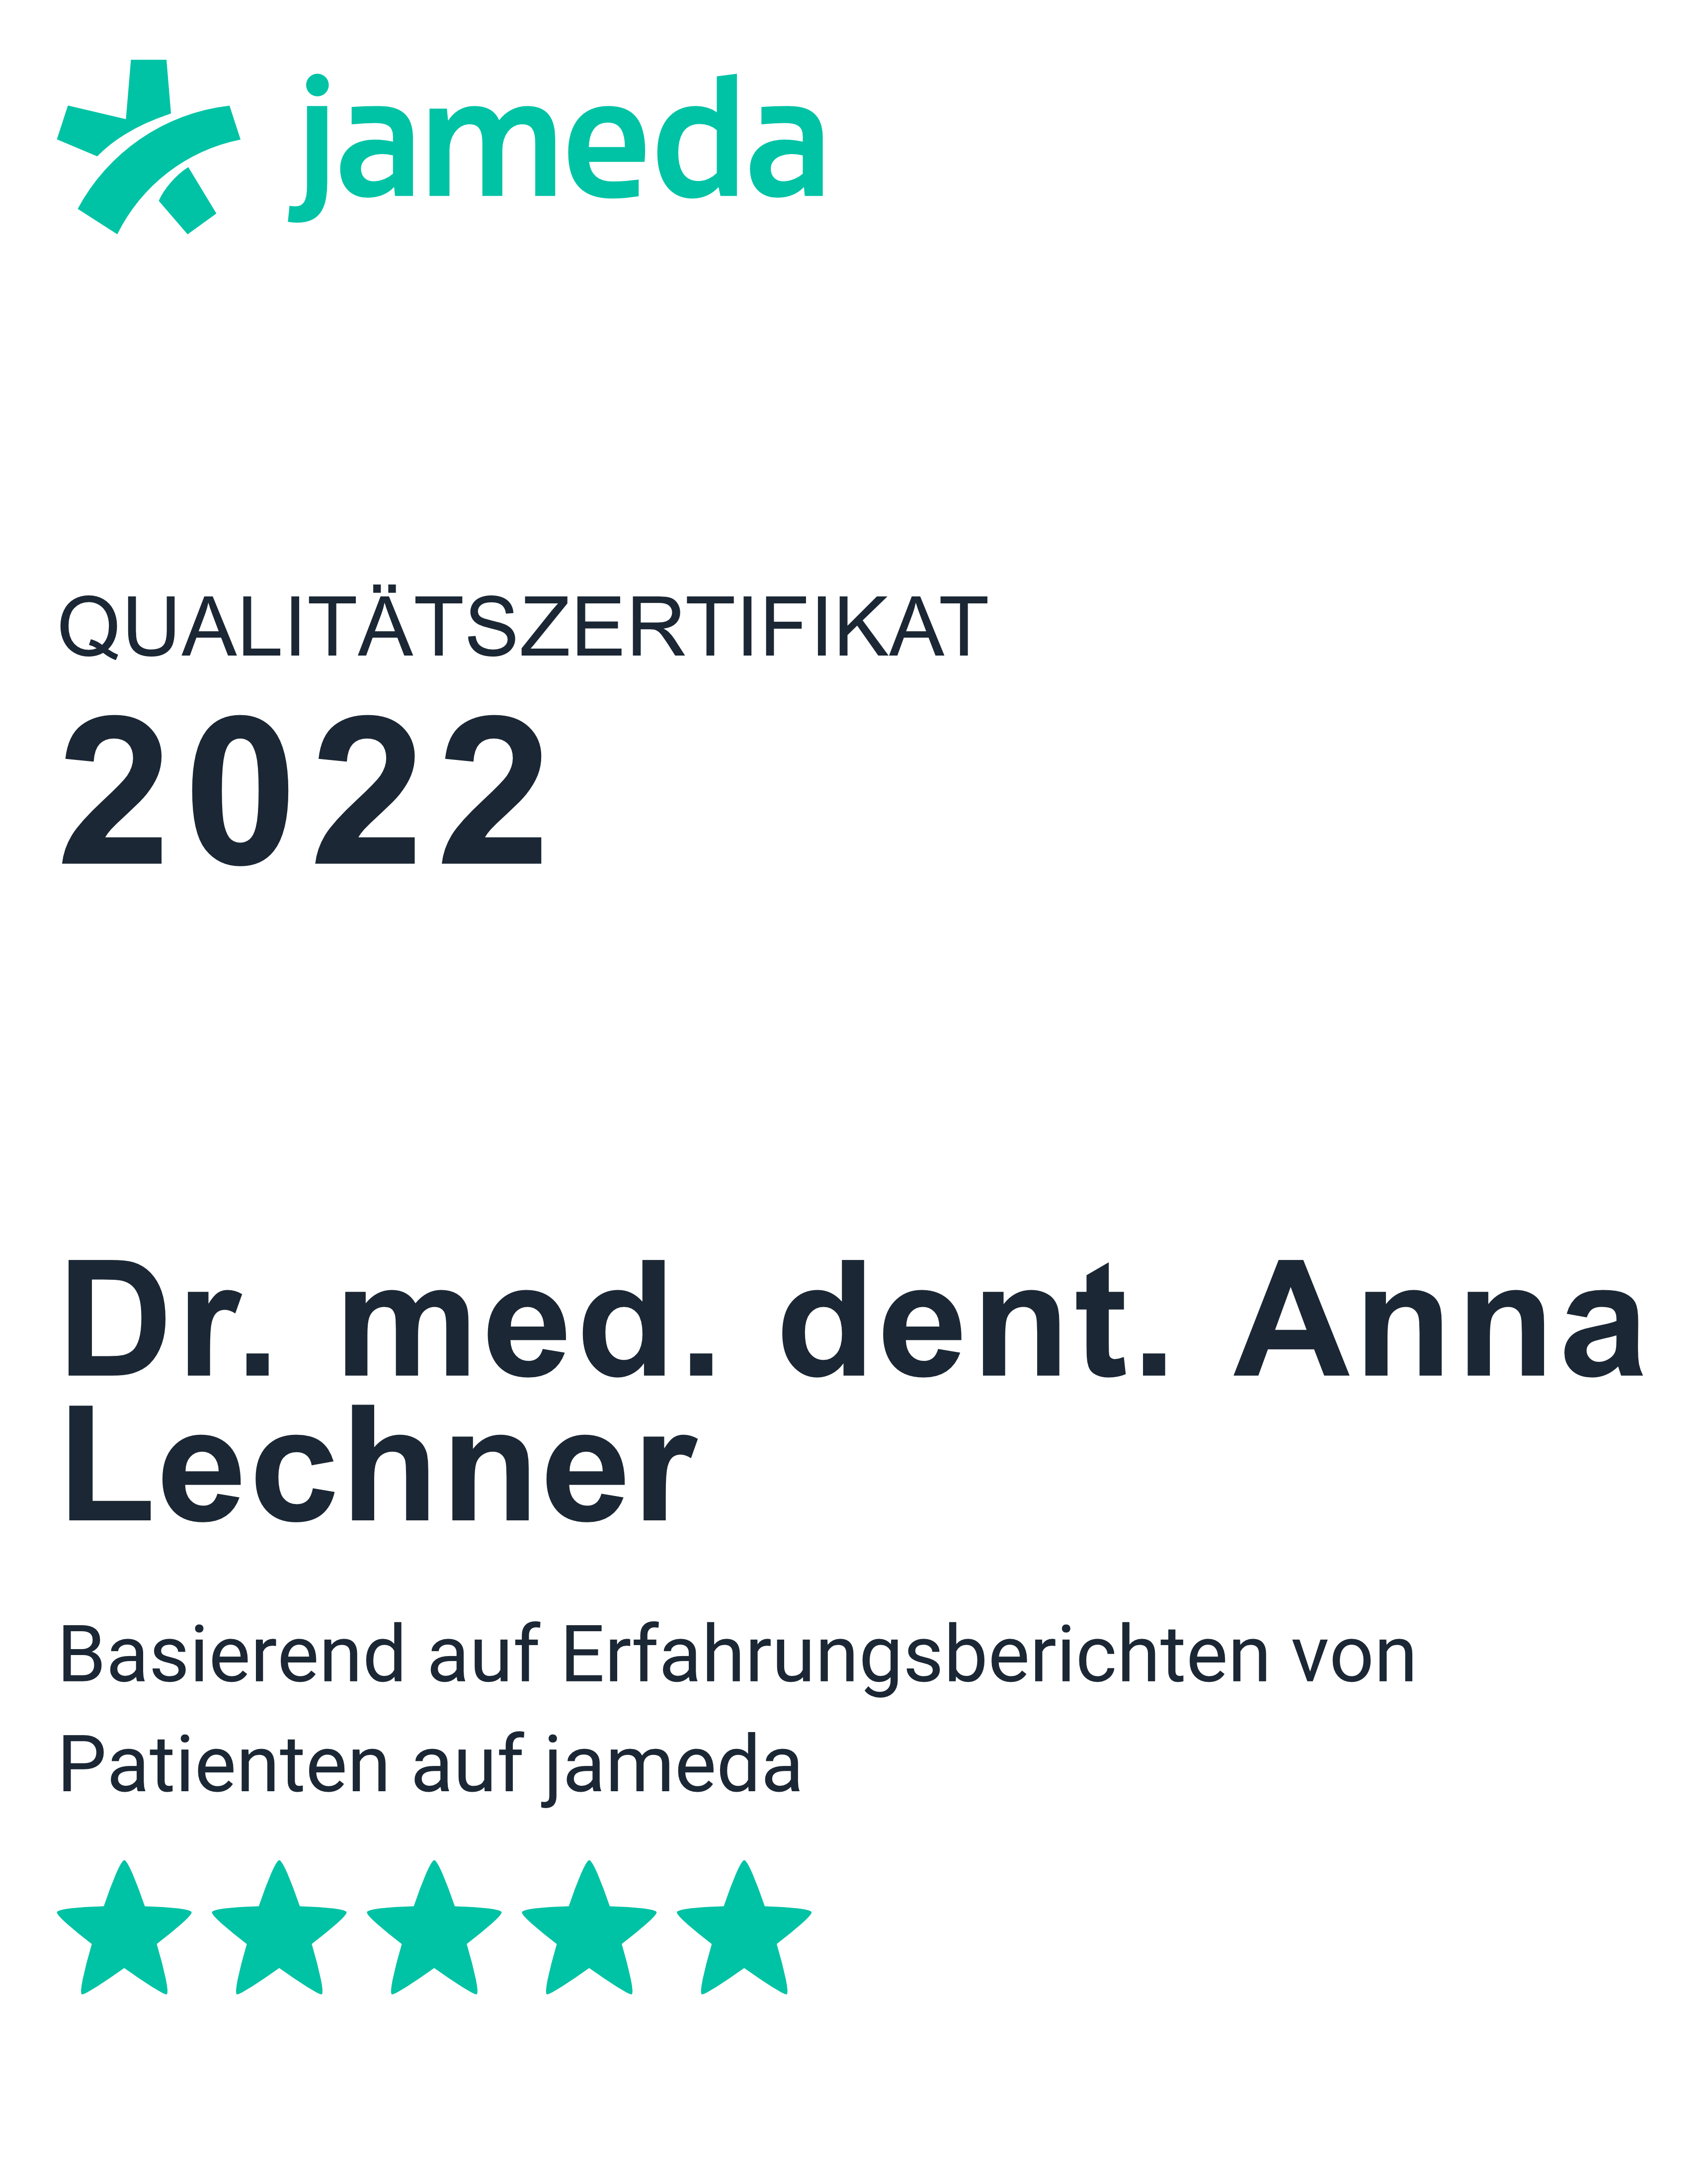 Qualitetszertifikat Dr. med. dent. Anna Lechner